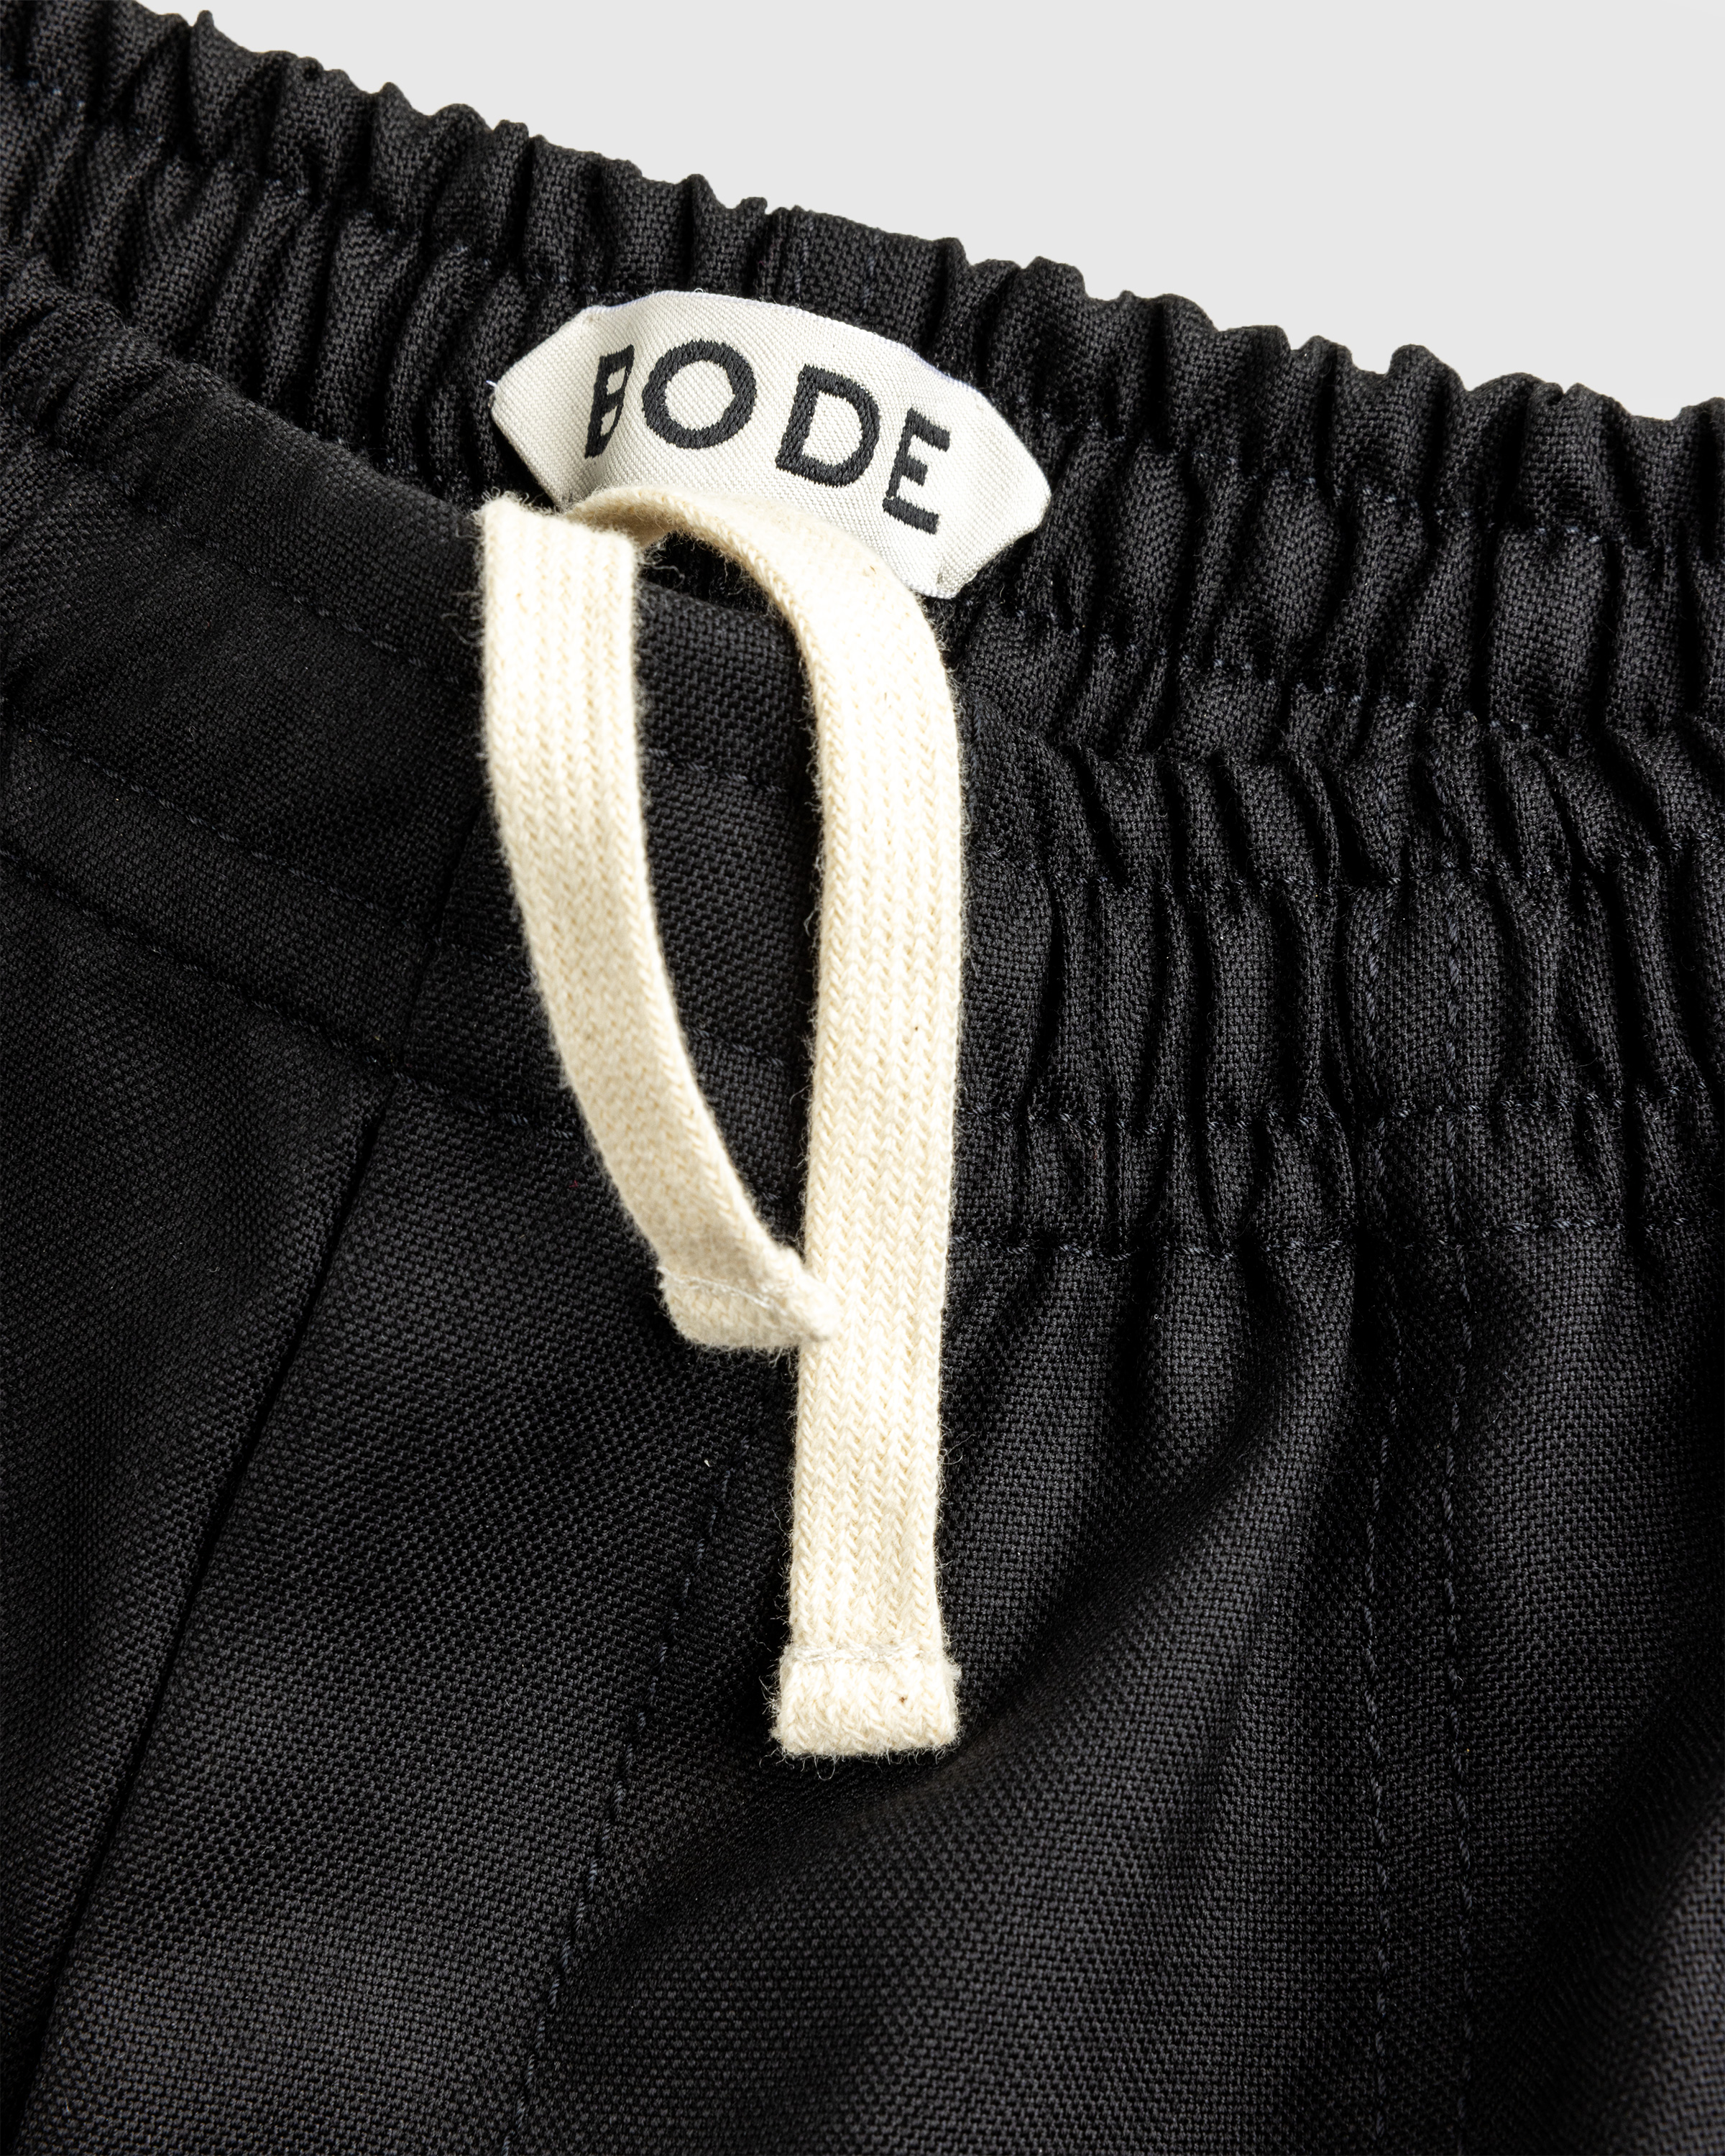 Bode – Lacework Shorts Black - Short Cuts - Black - Image 6